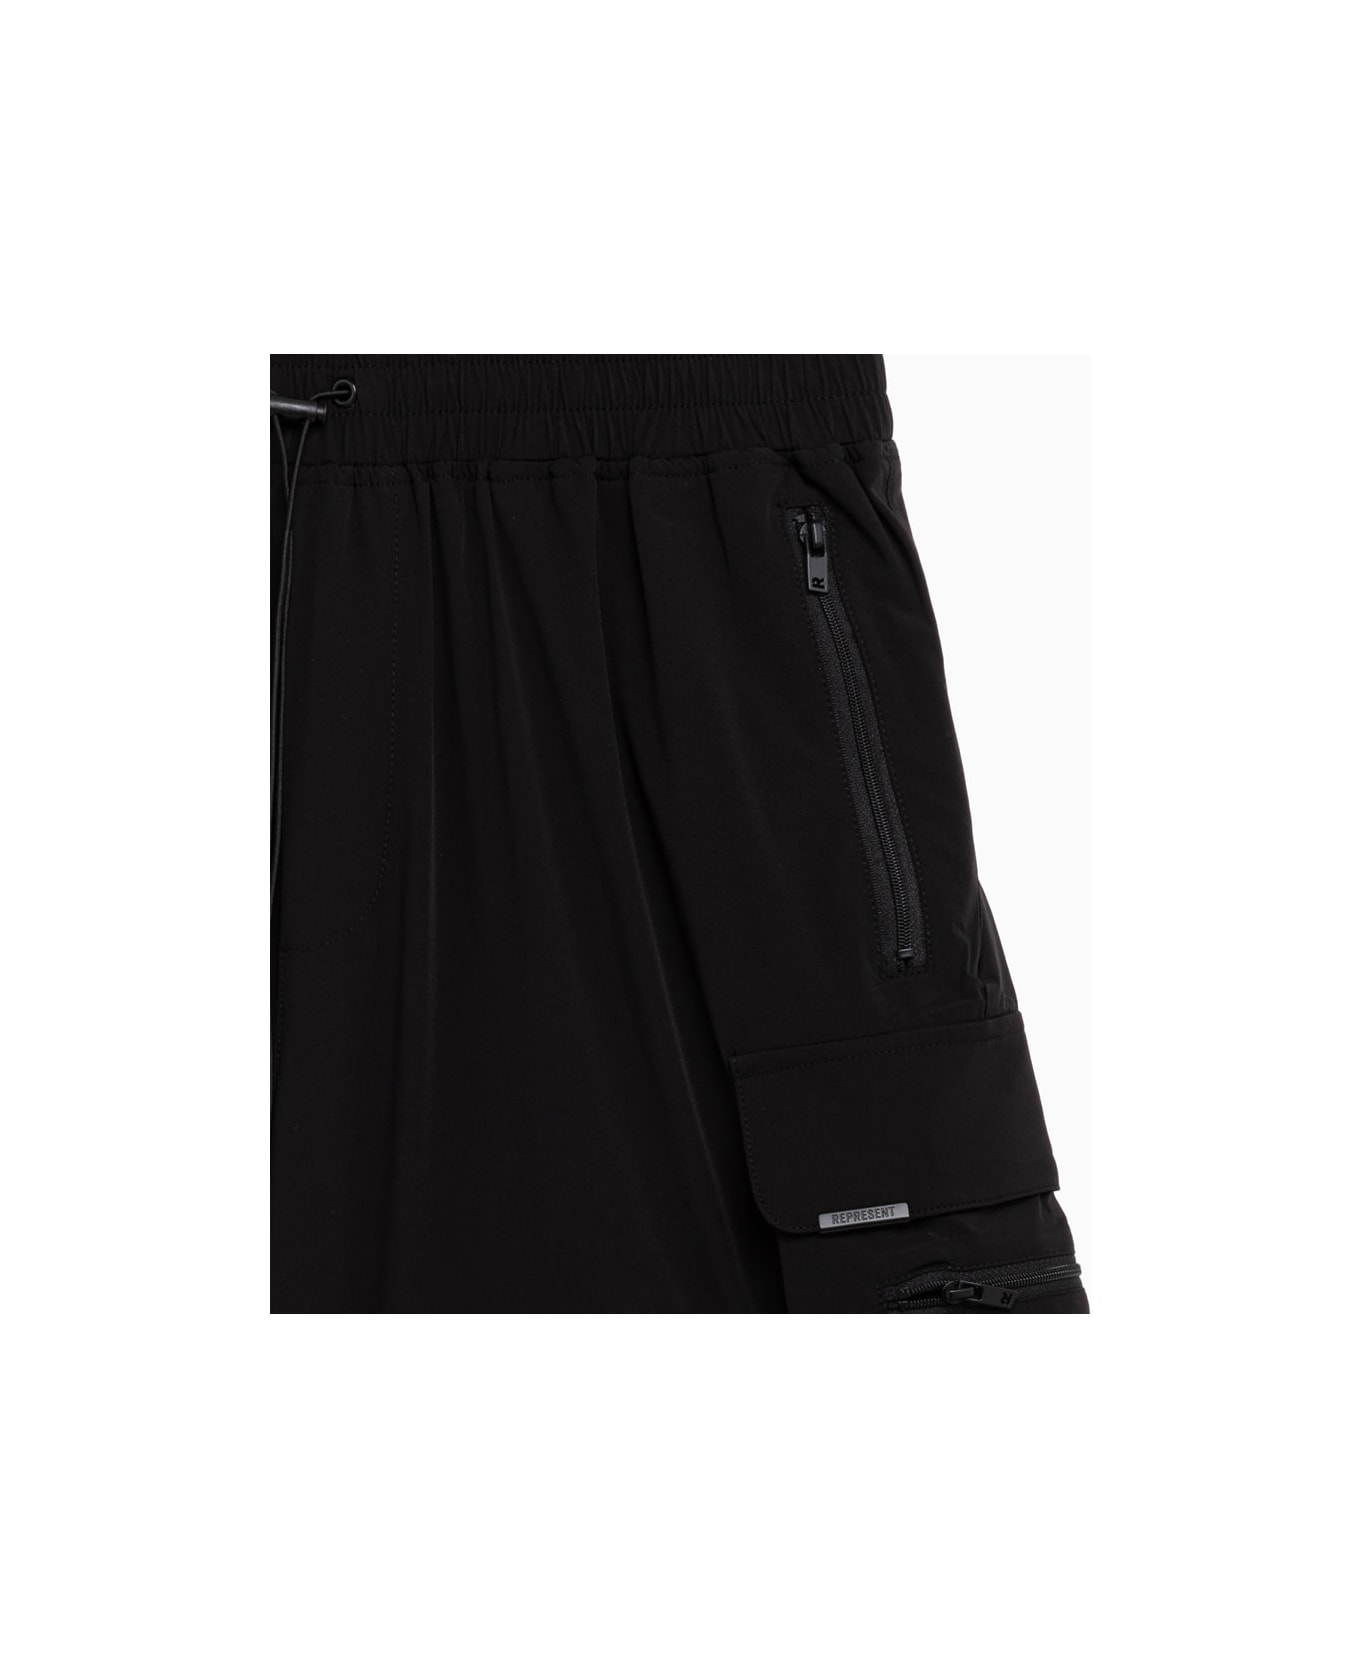 REPRESENT 247 Shorts - BLACK ショートパンツ